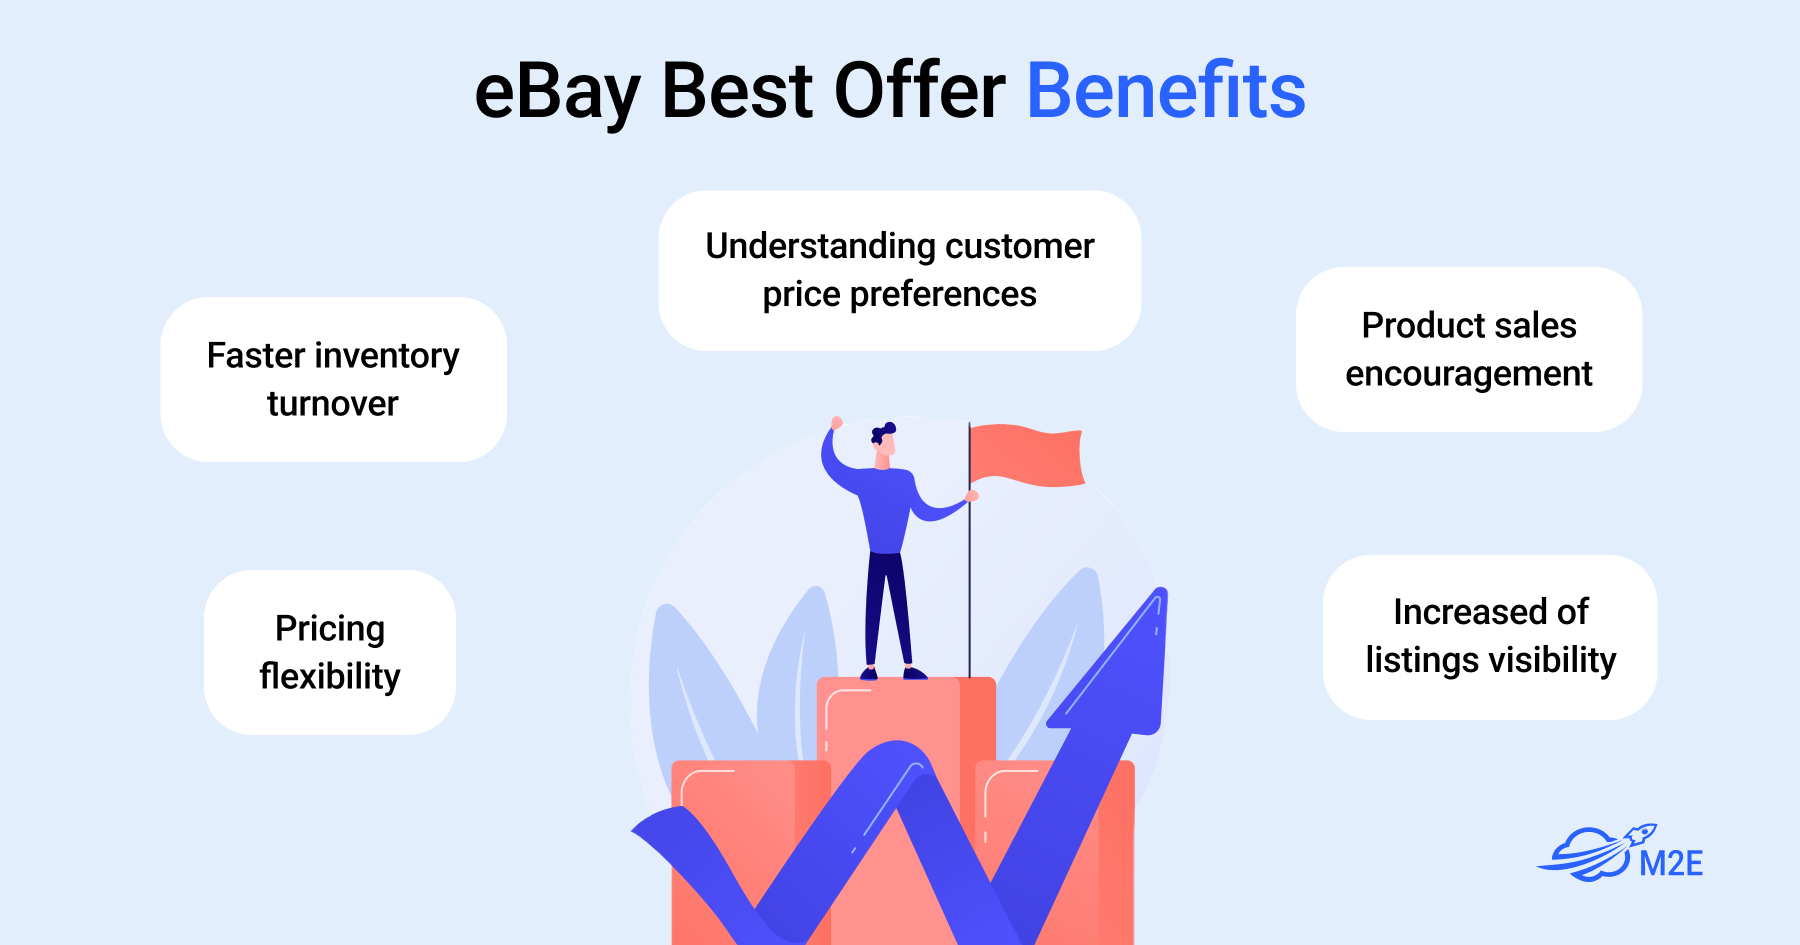 Benefits of eBay’s Best Offer